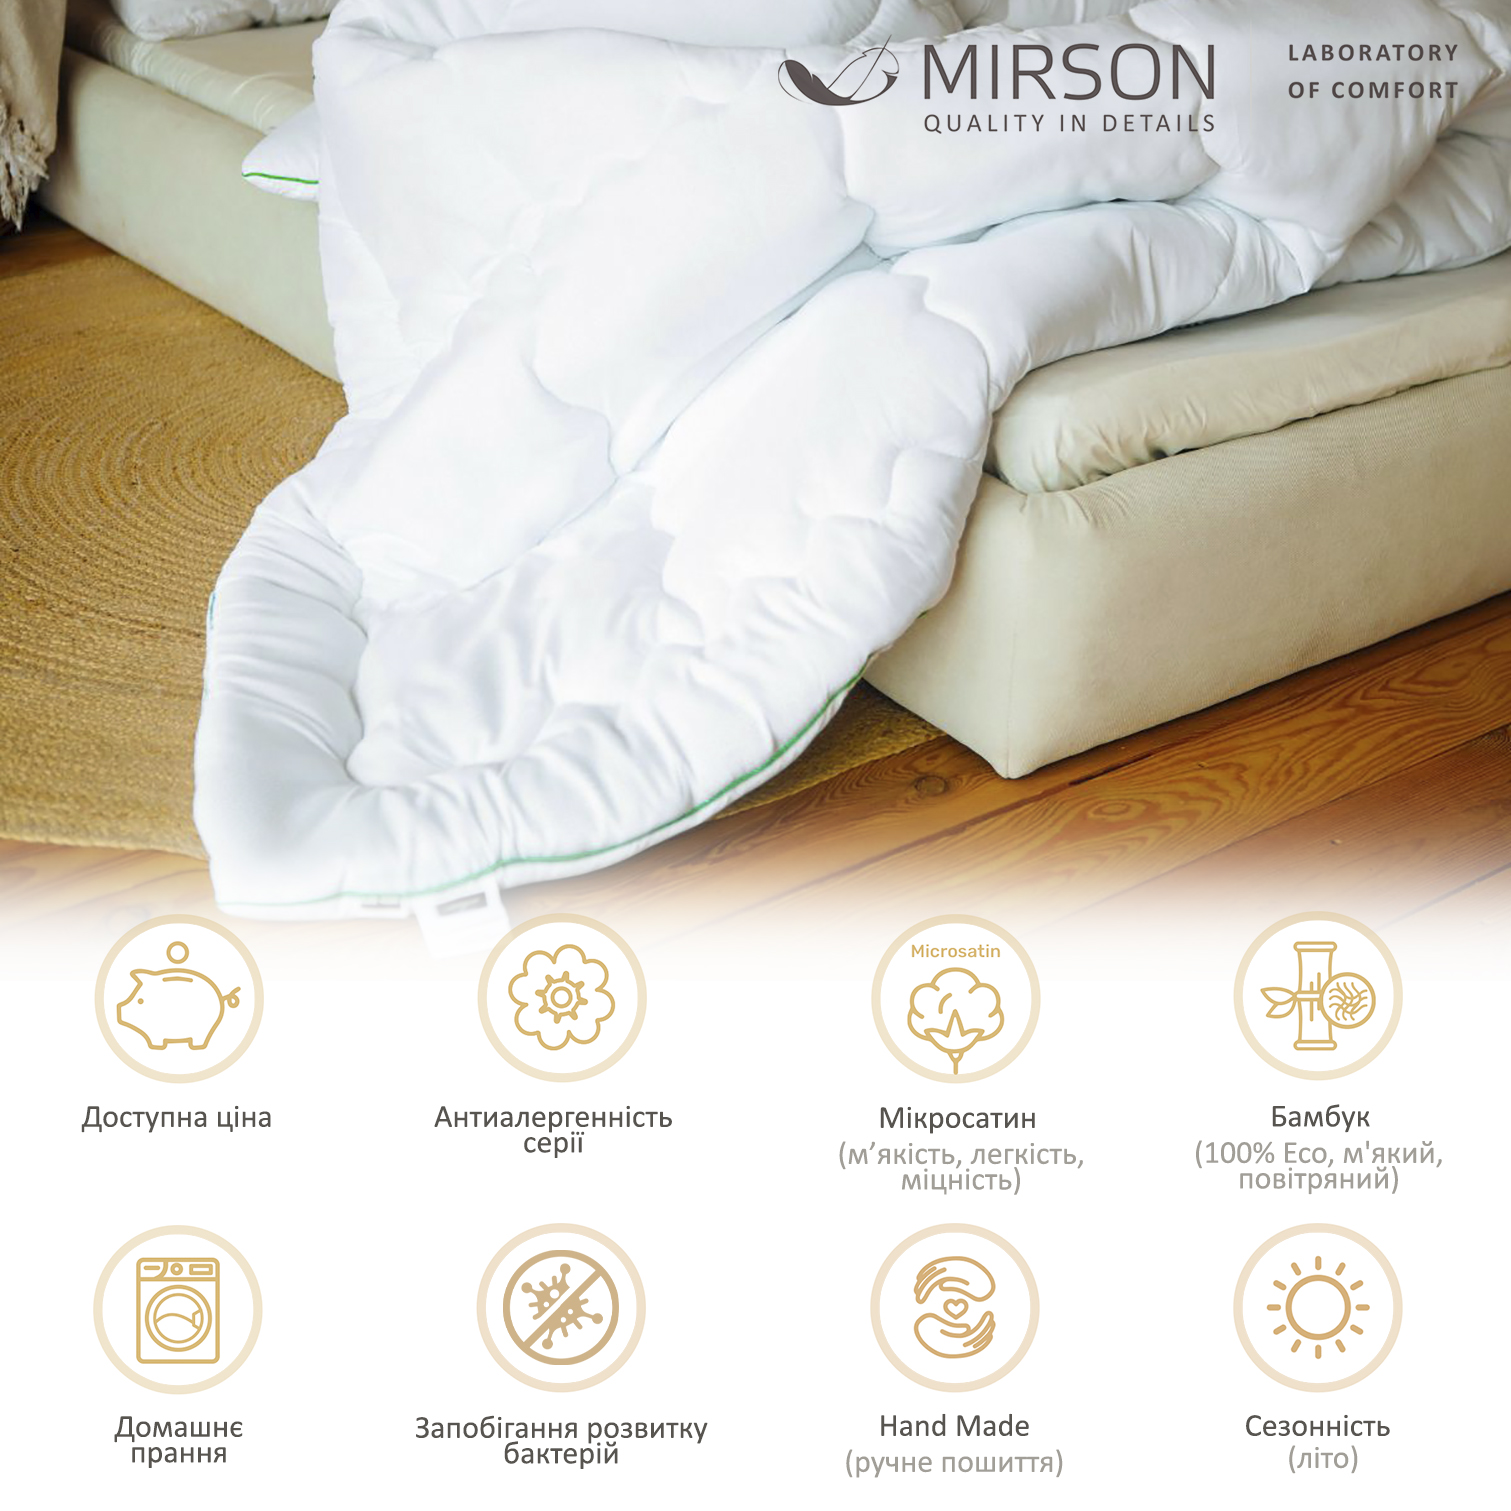 Одеяло бамбуковое MirSon Eco Mikrosatin Hand Made №0441, летнее, 140x205 см, белое - фото 6